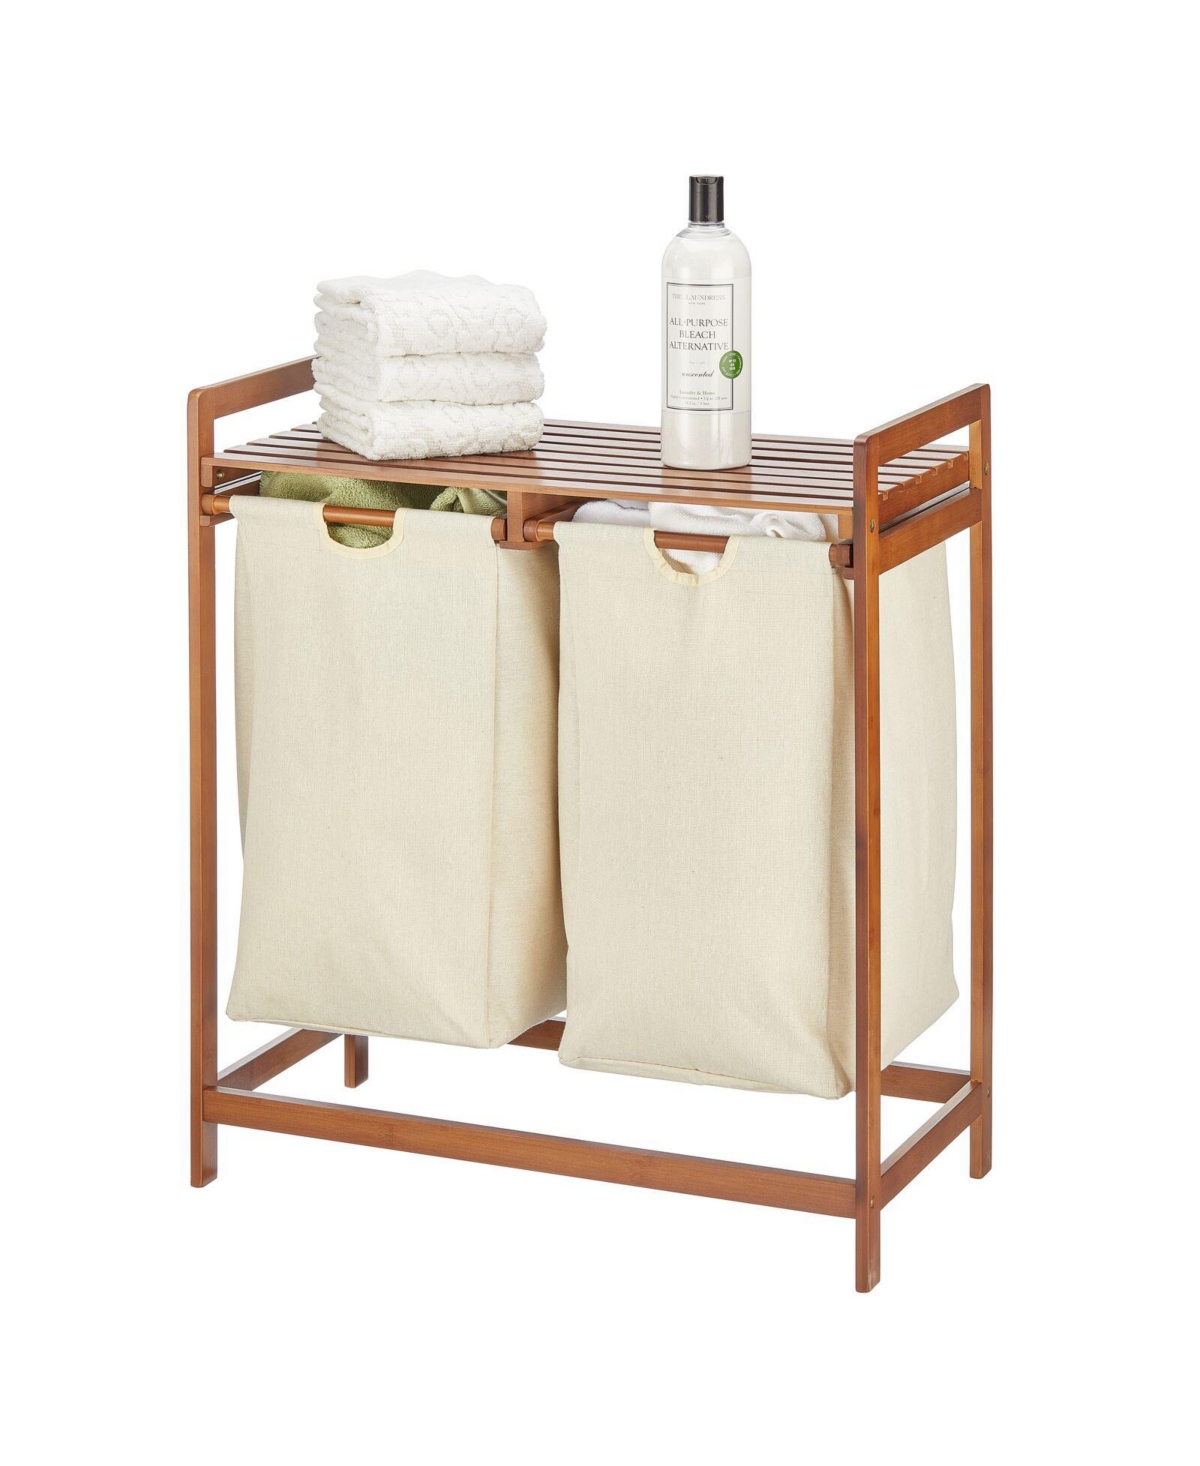 Bamboo Double Laundry Hamper, Large Capacity - Vintage